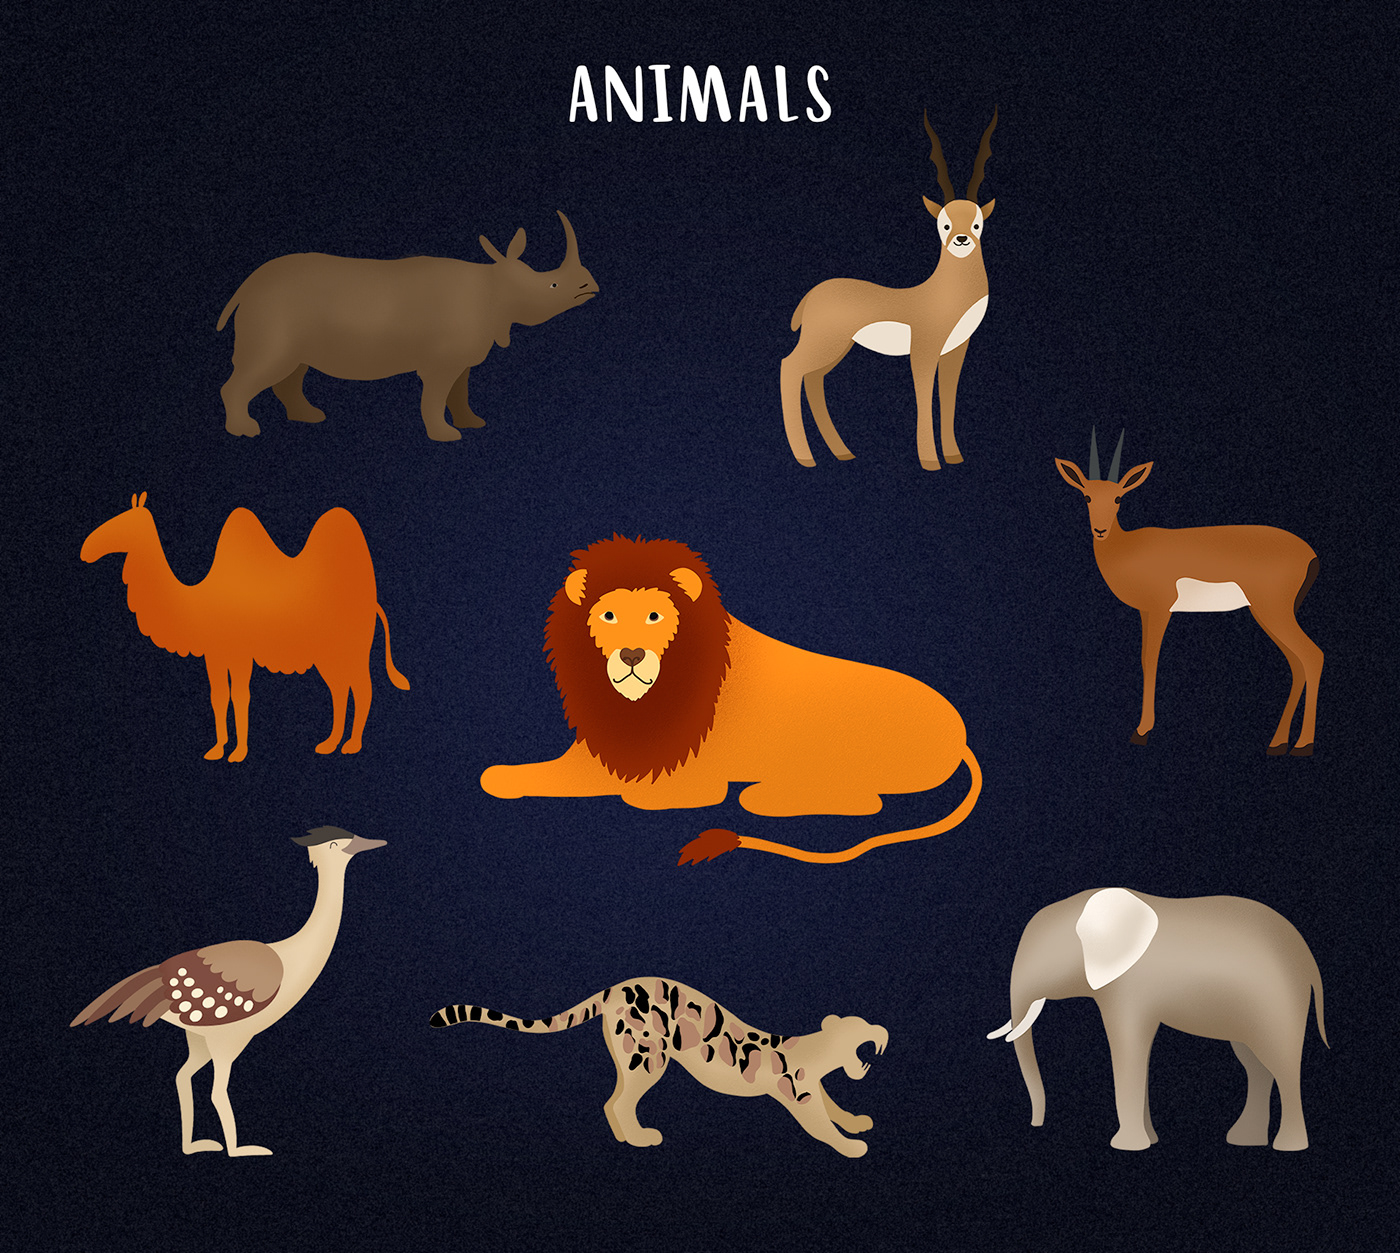 animals of india, illustration, children's illustration